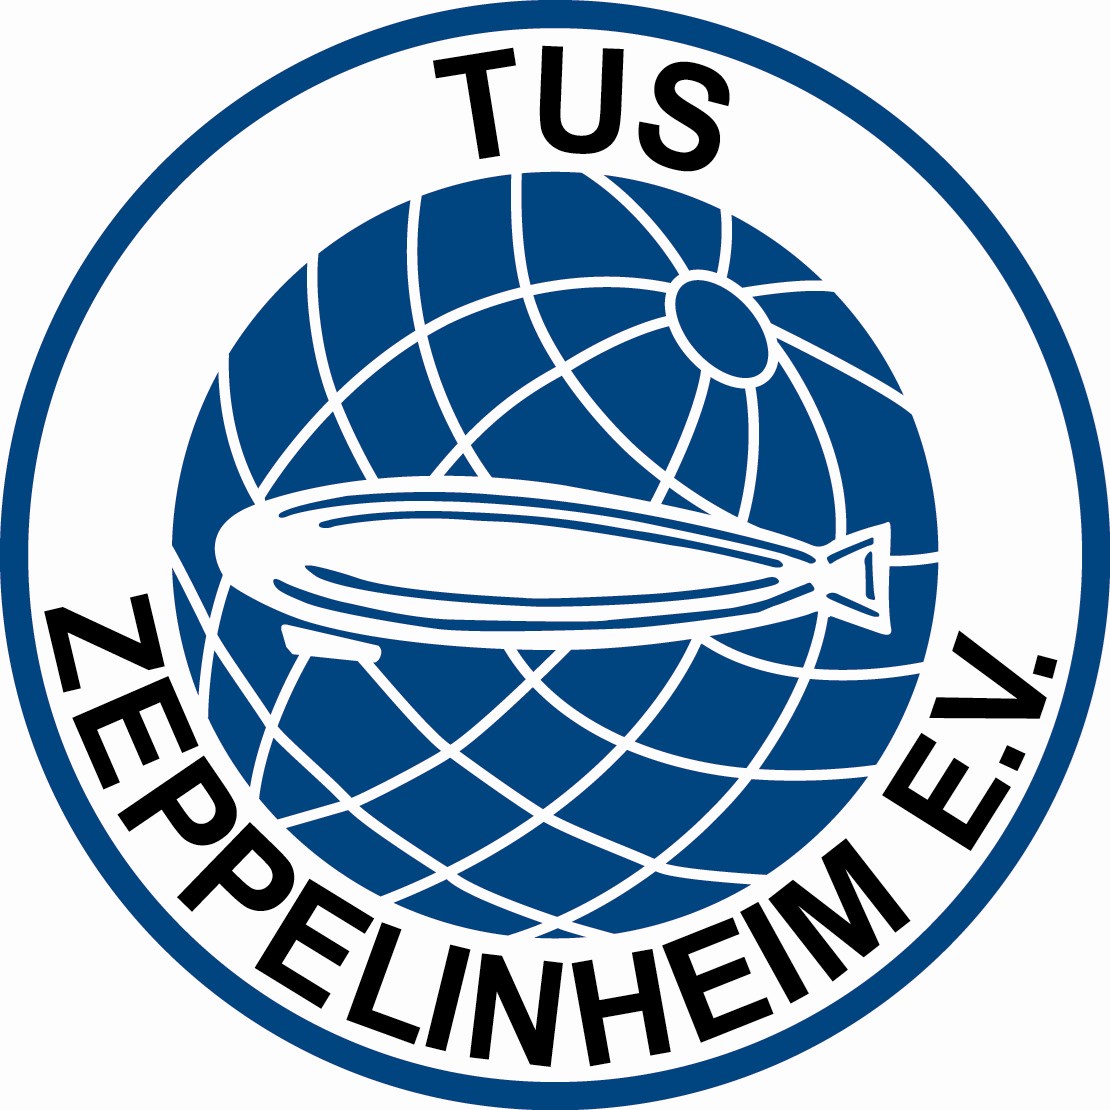 Frankfurt regionale Produkte: TuS Zeppelinheim